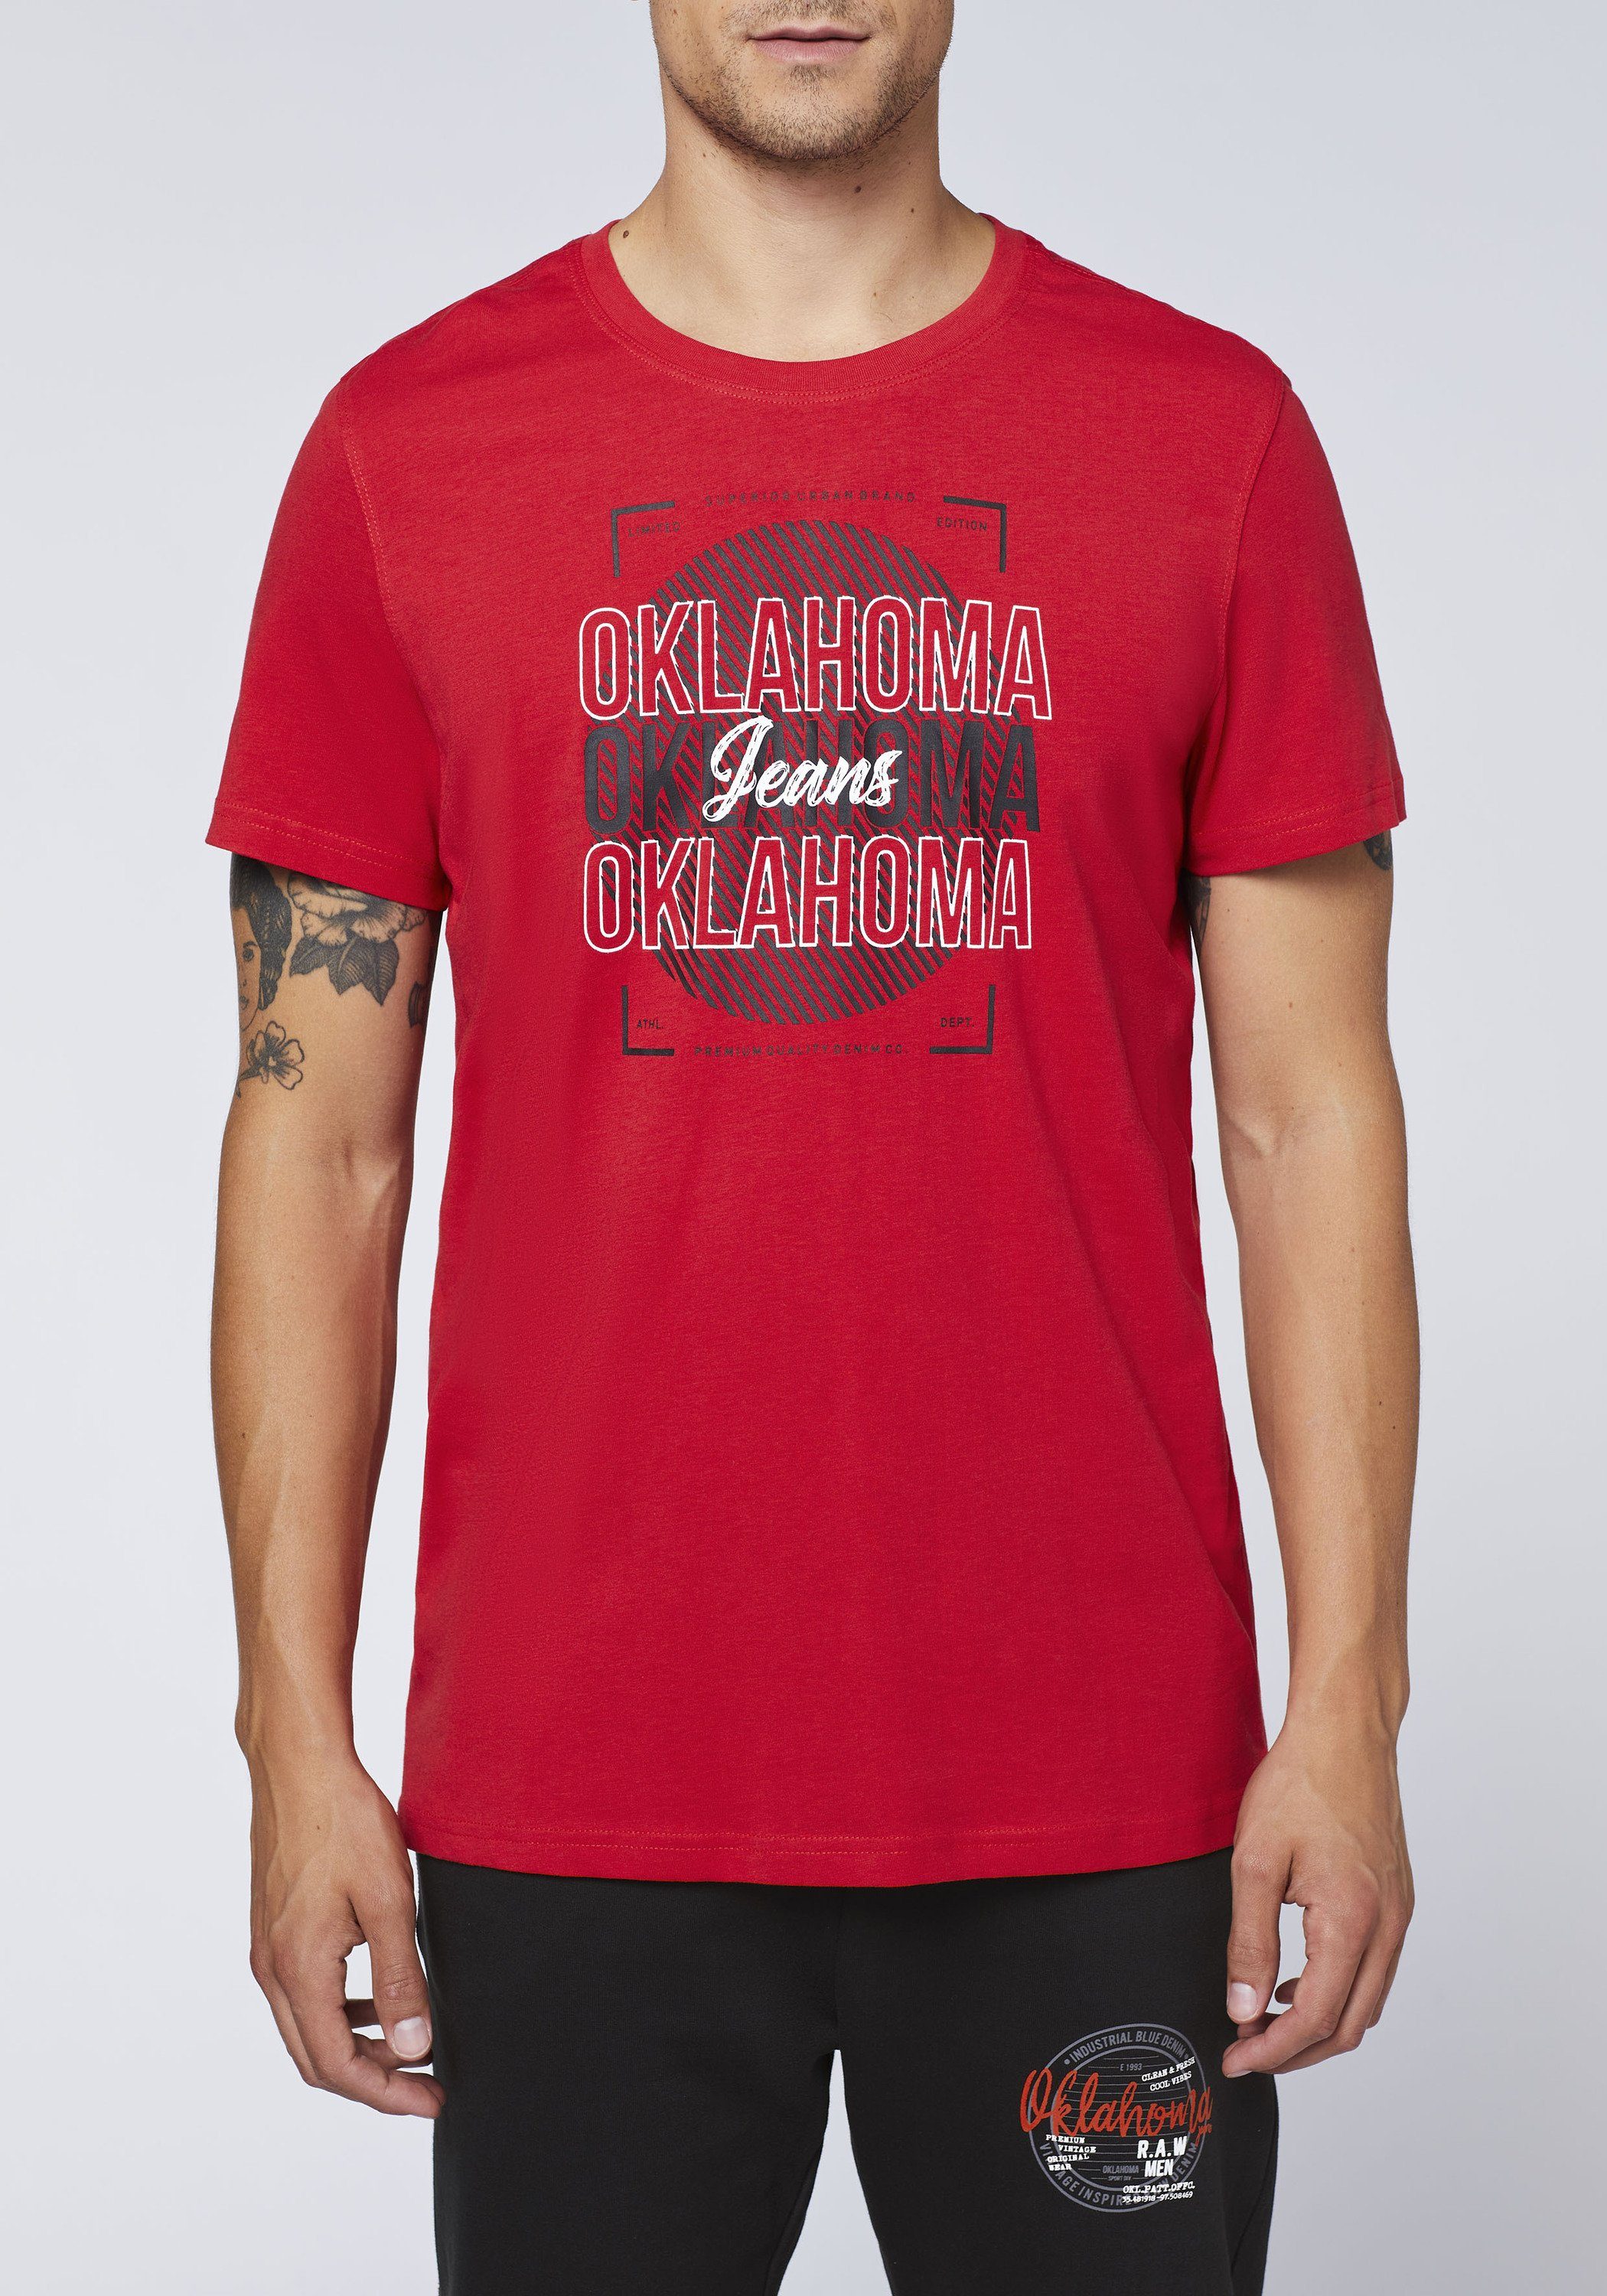 Chili Label-Look Pepper 19-1557 Print-Shirt im neuen Jeans Oklahoma